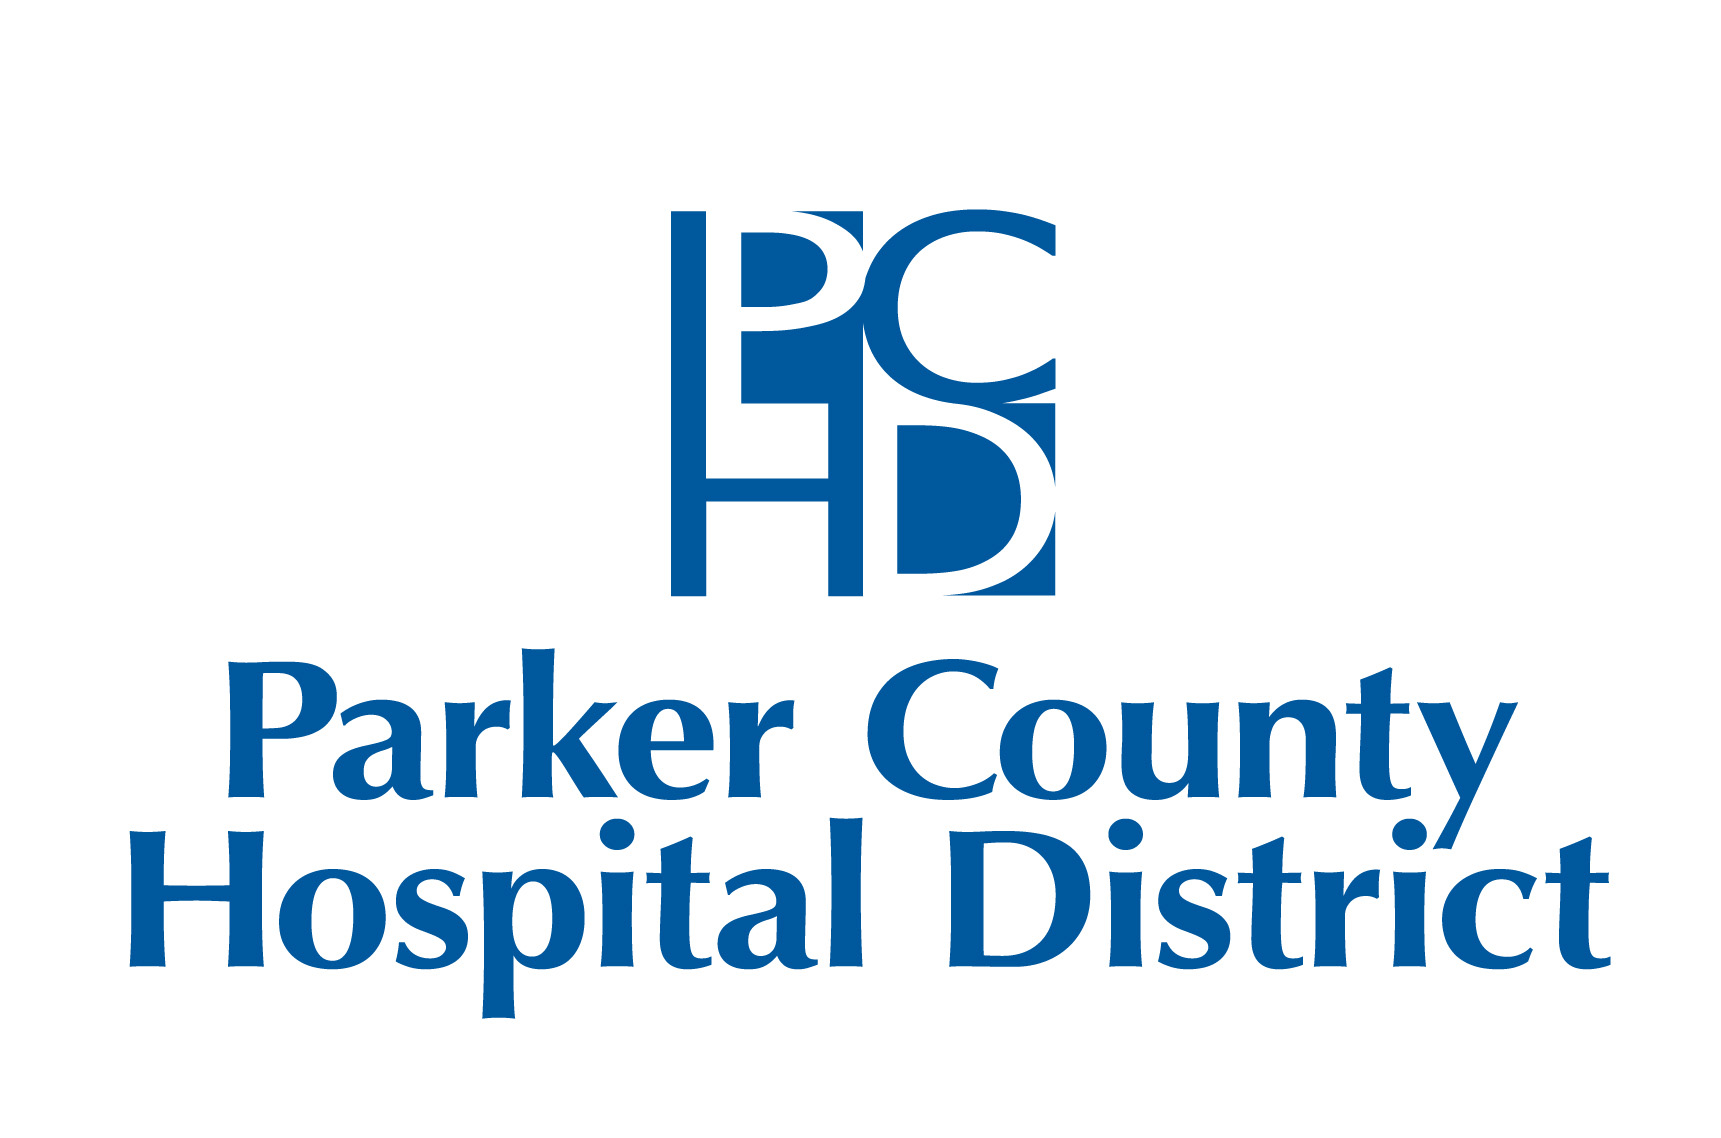 Parker County Hospital District